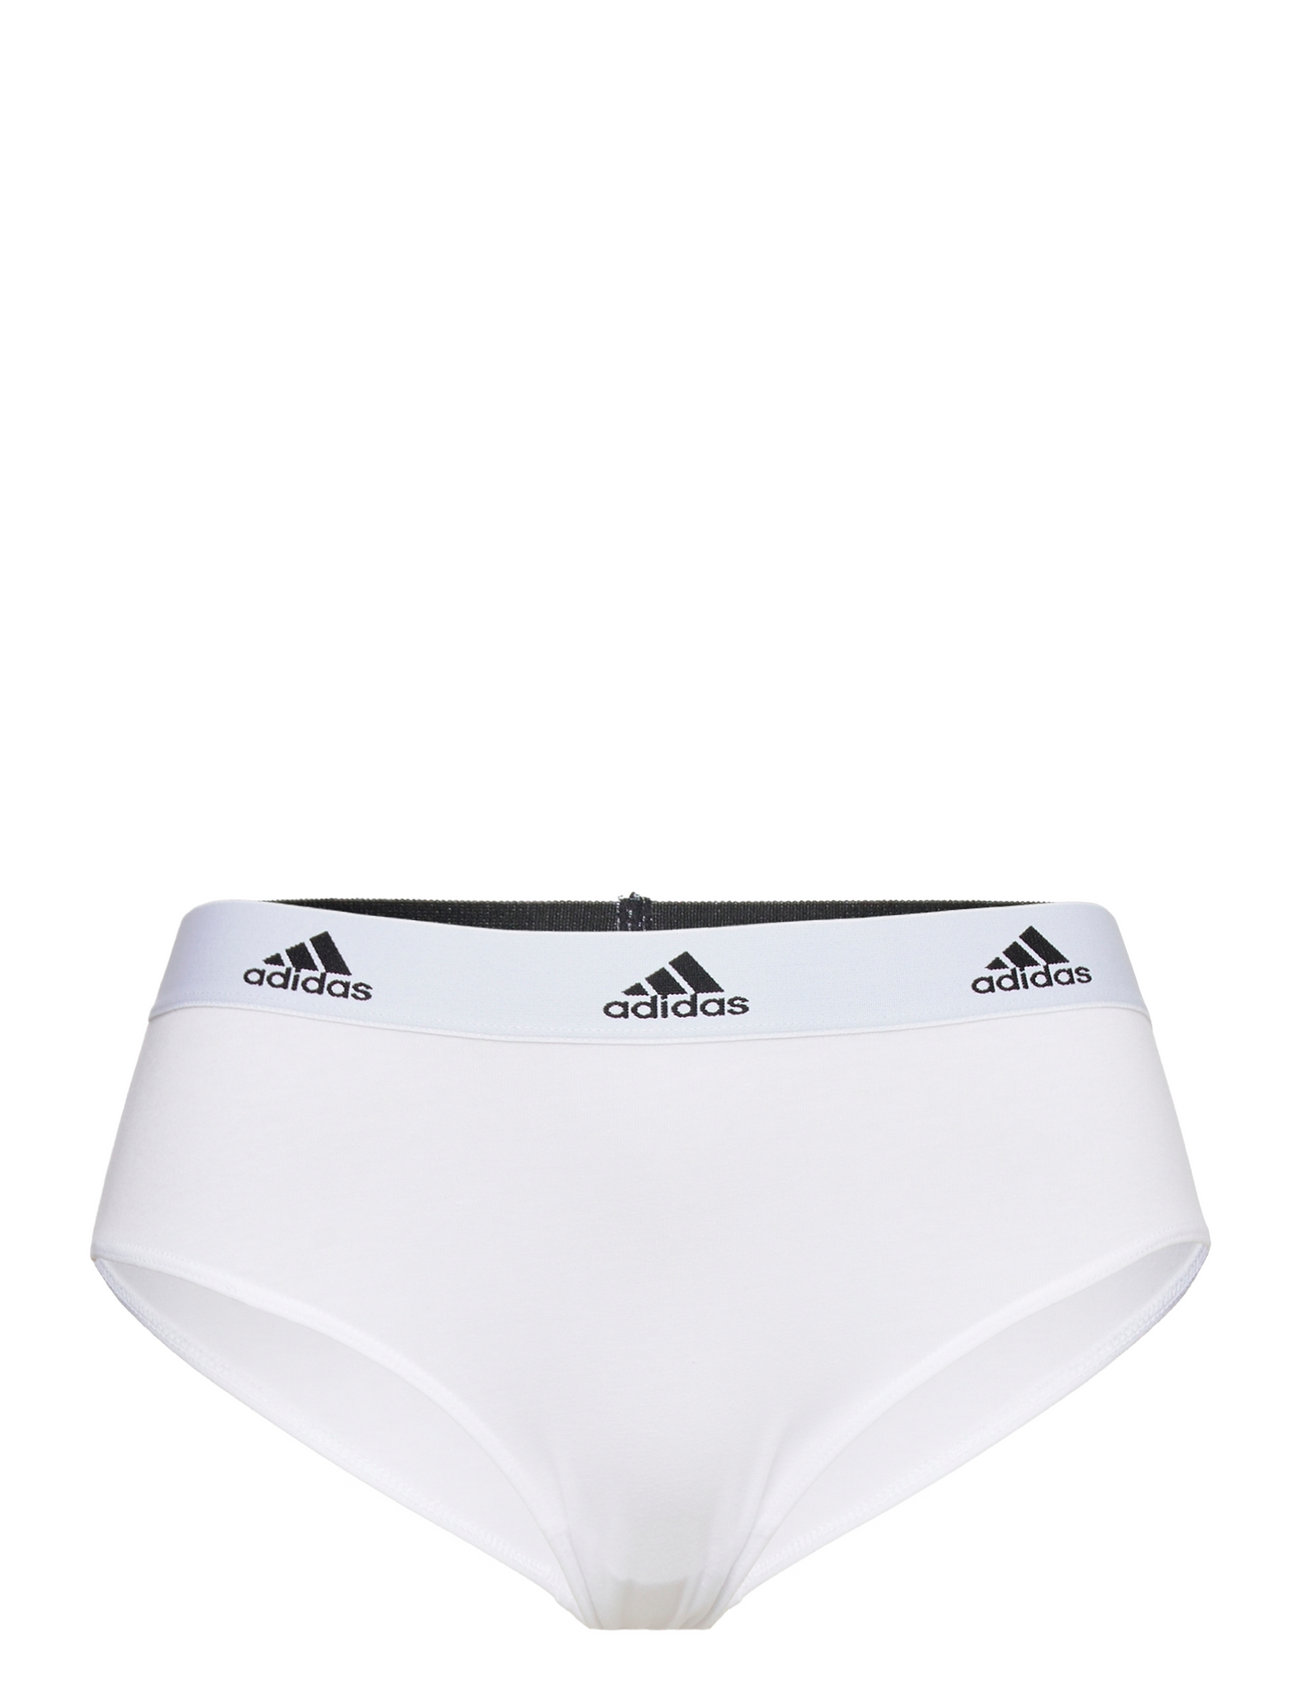 adidas Underwear Brief – panties – shop at Booztlet